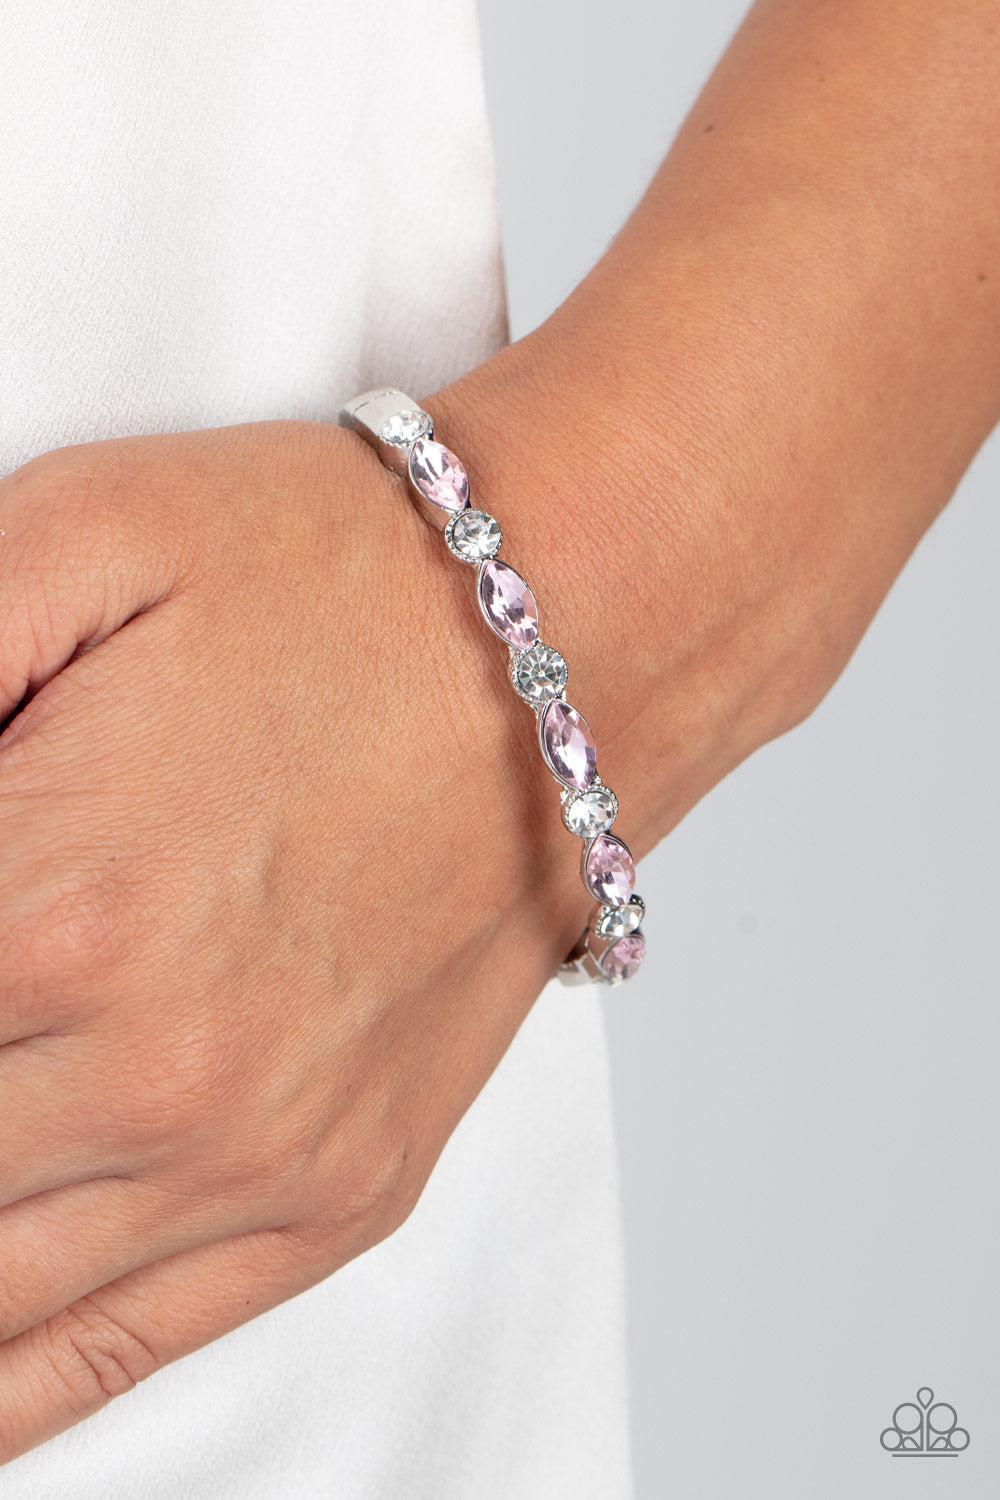 Petitely Powerhouse Pink Rhinestone Bracelet - Paparazzi Accessories- lightbox - CarasShop.com - $5 Jewelry by Cara Jewels